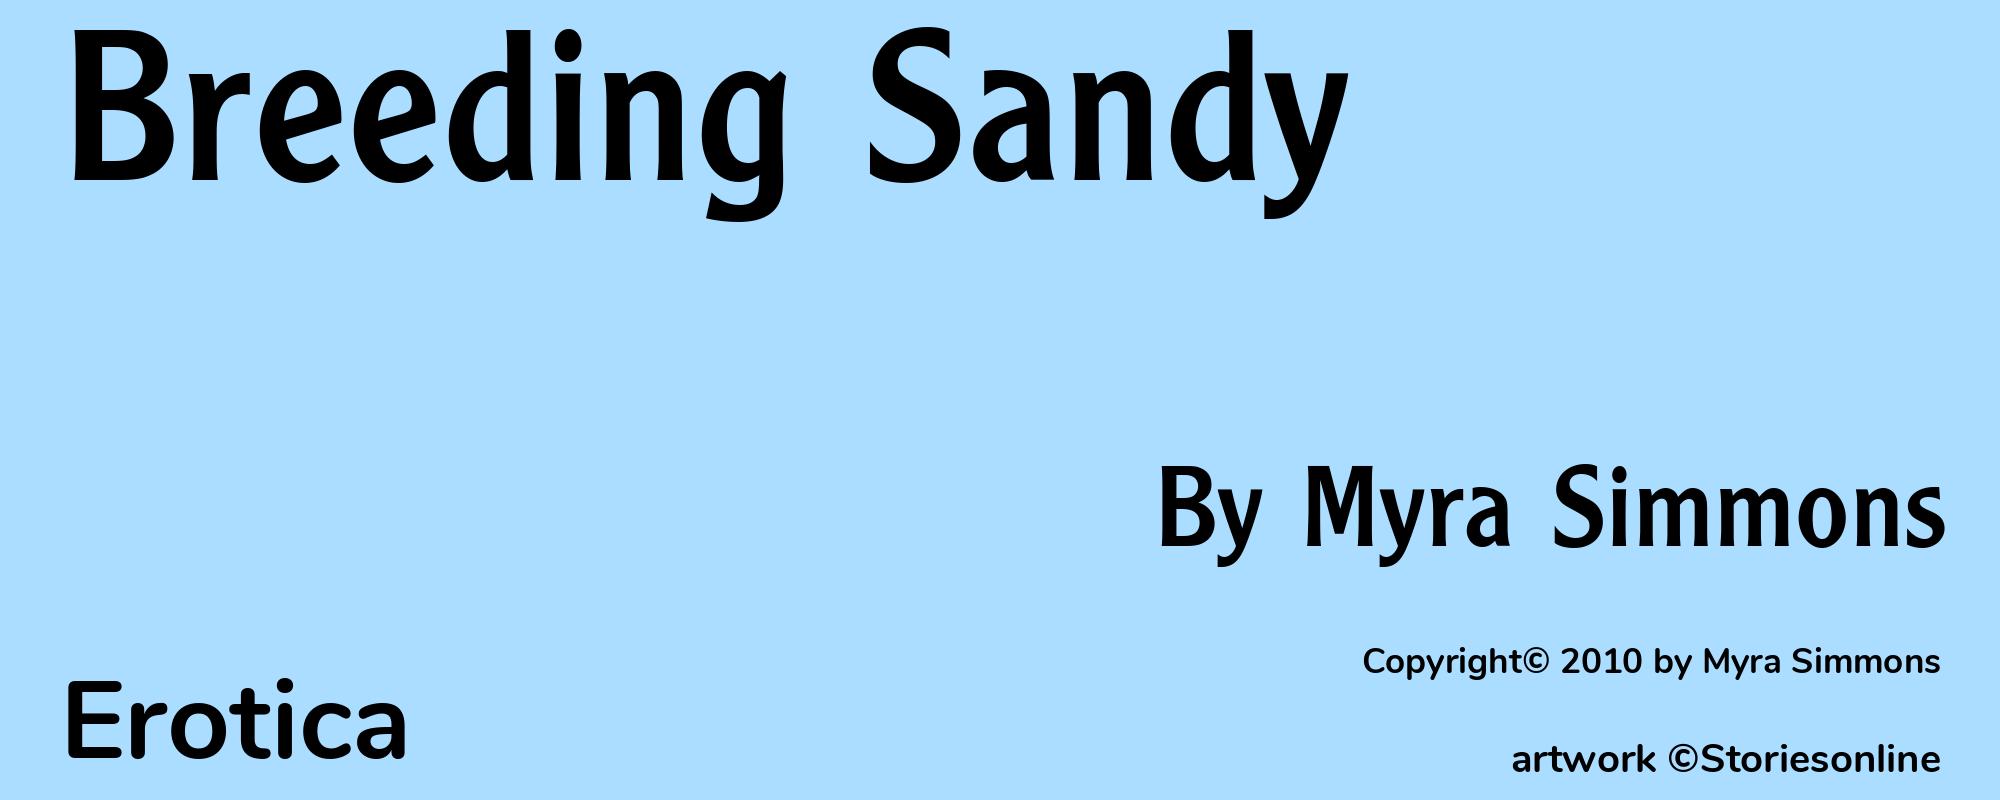 Breeding Sandy - Cover